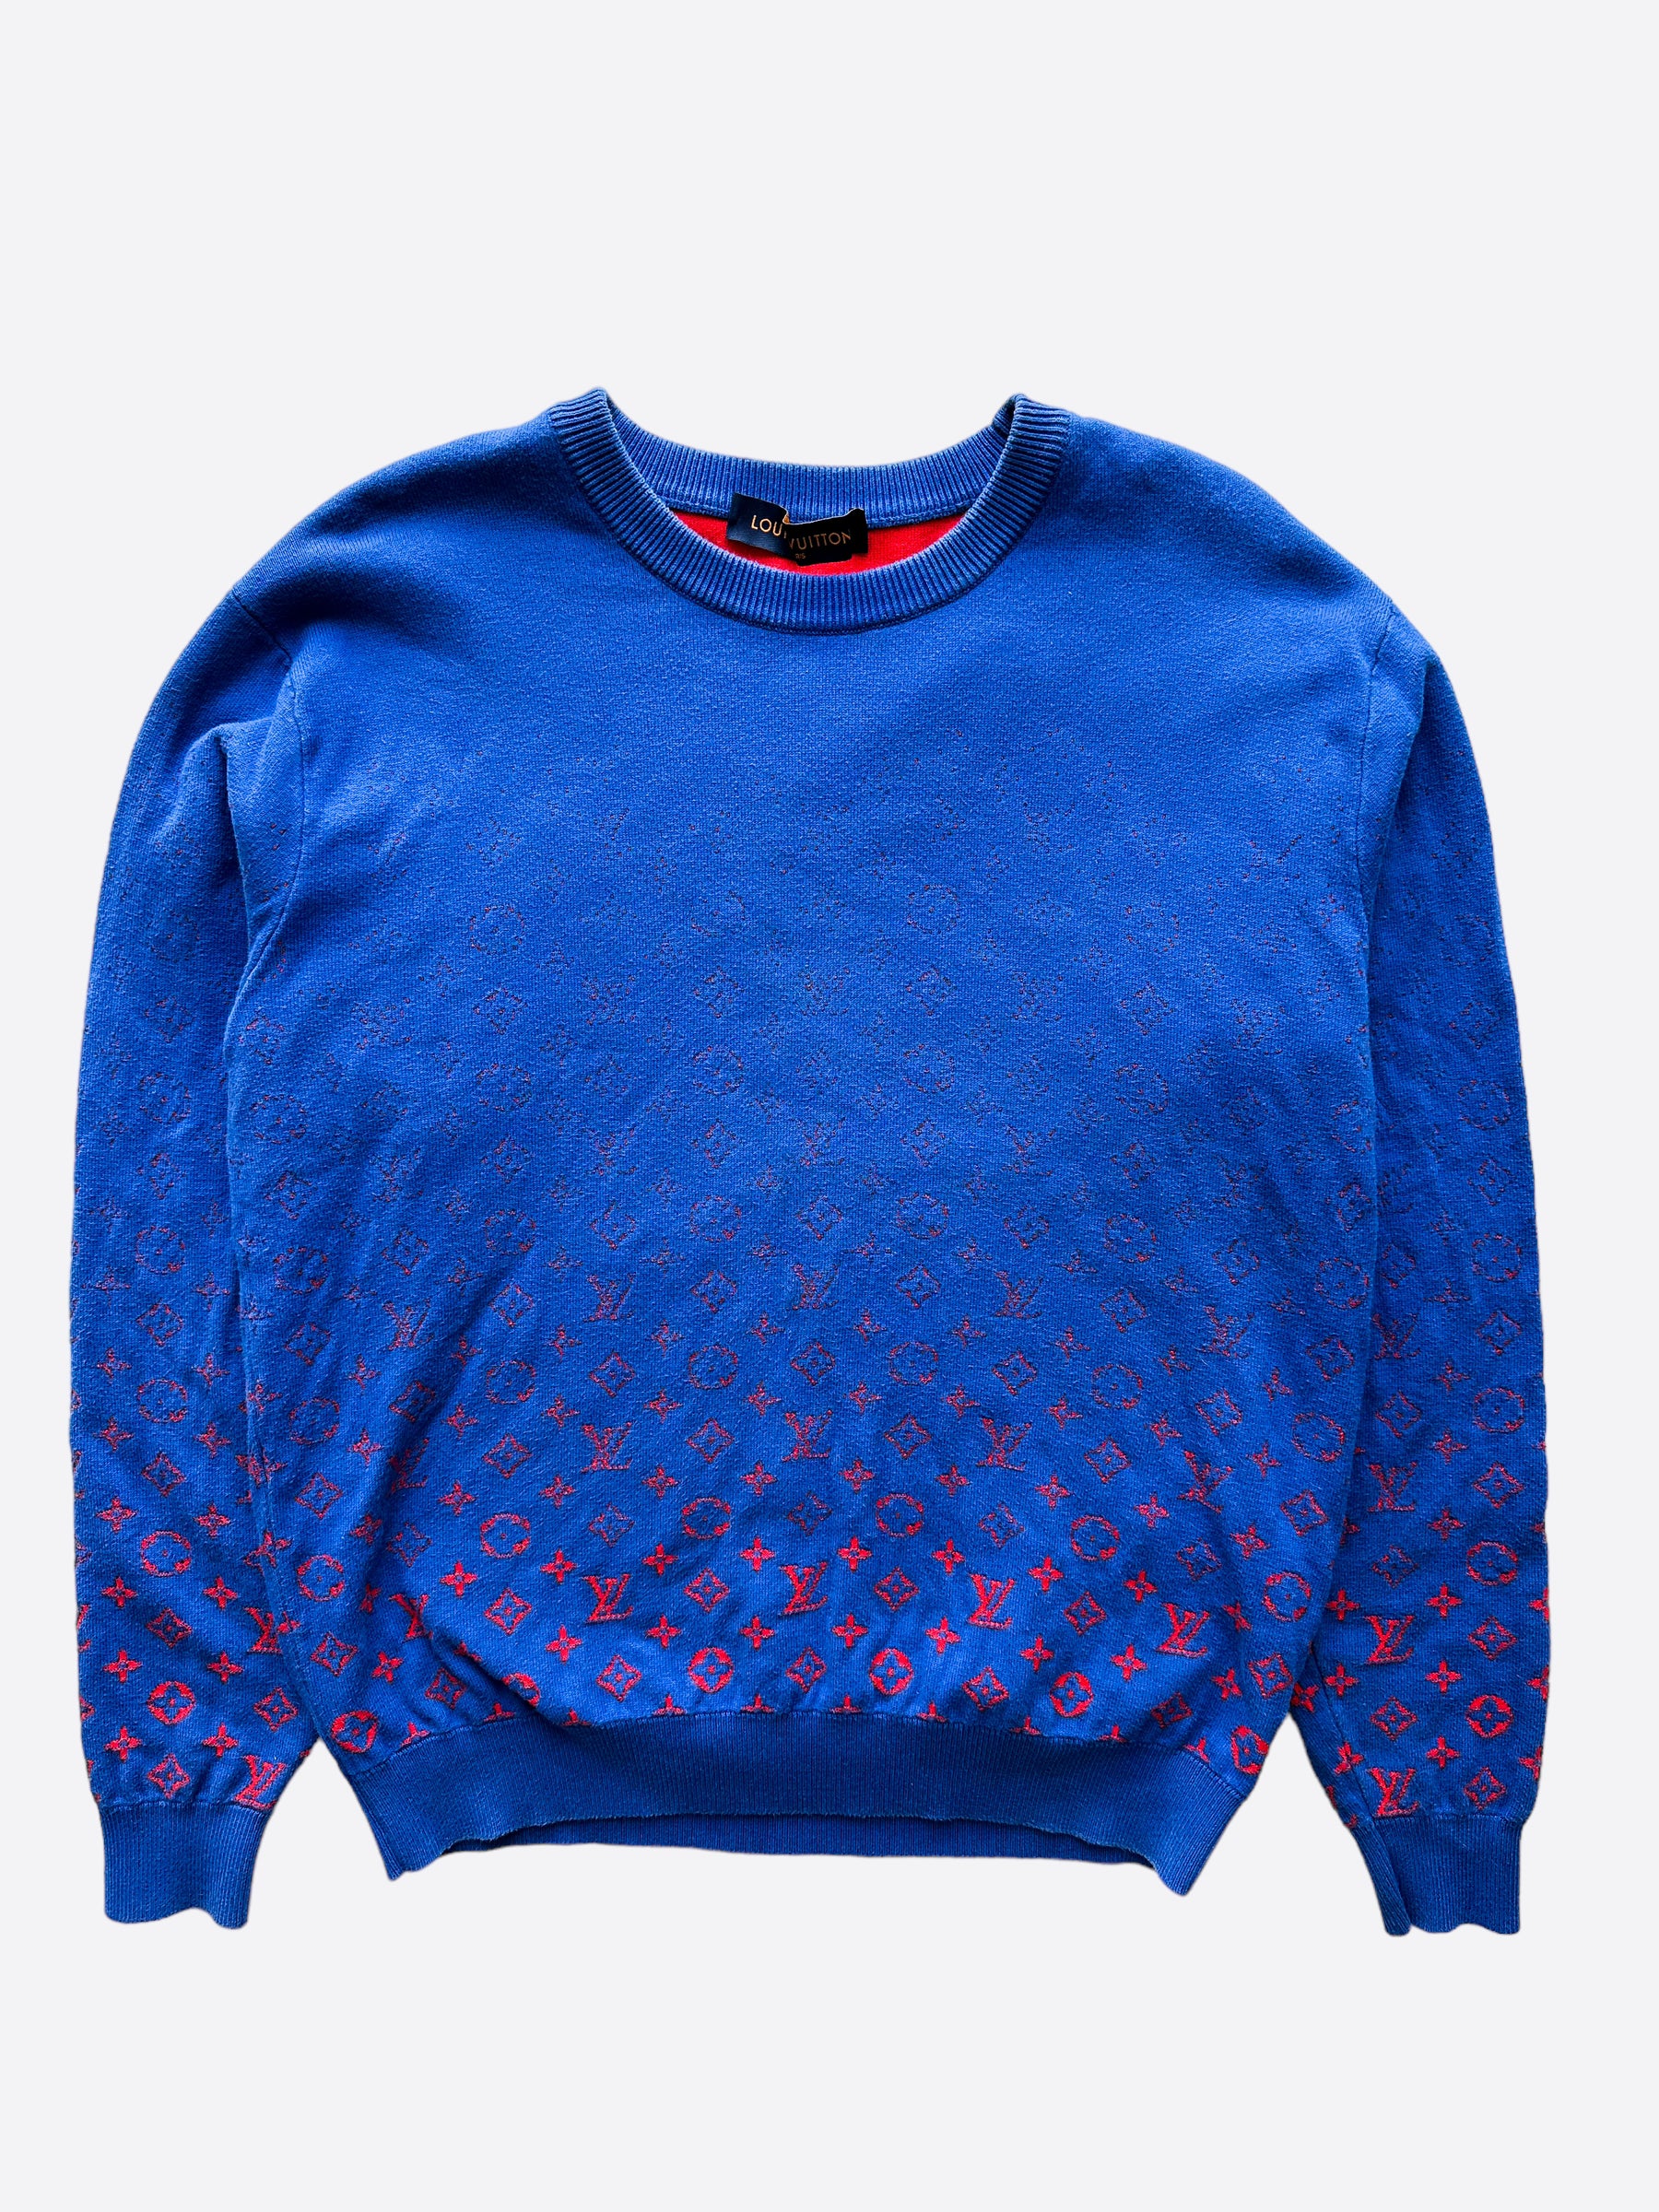 blue louis vuitton sweater